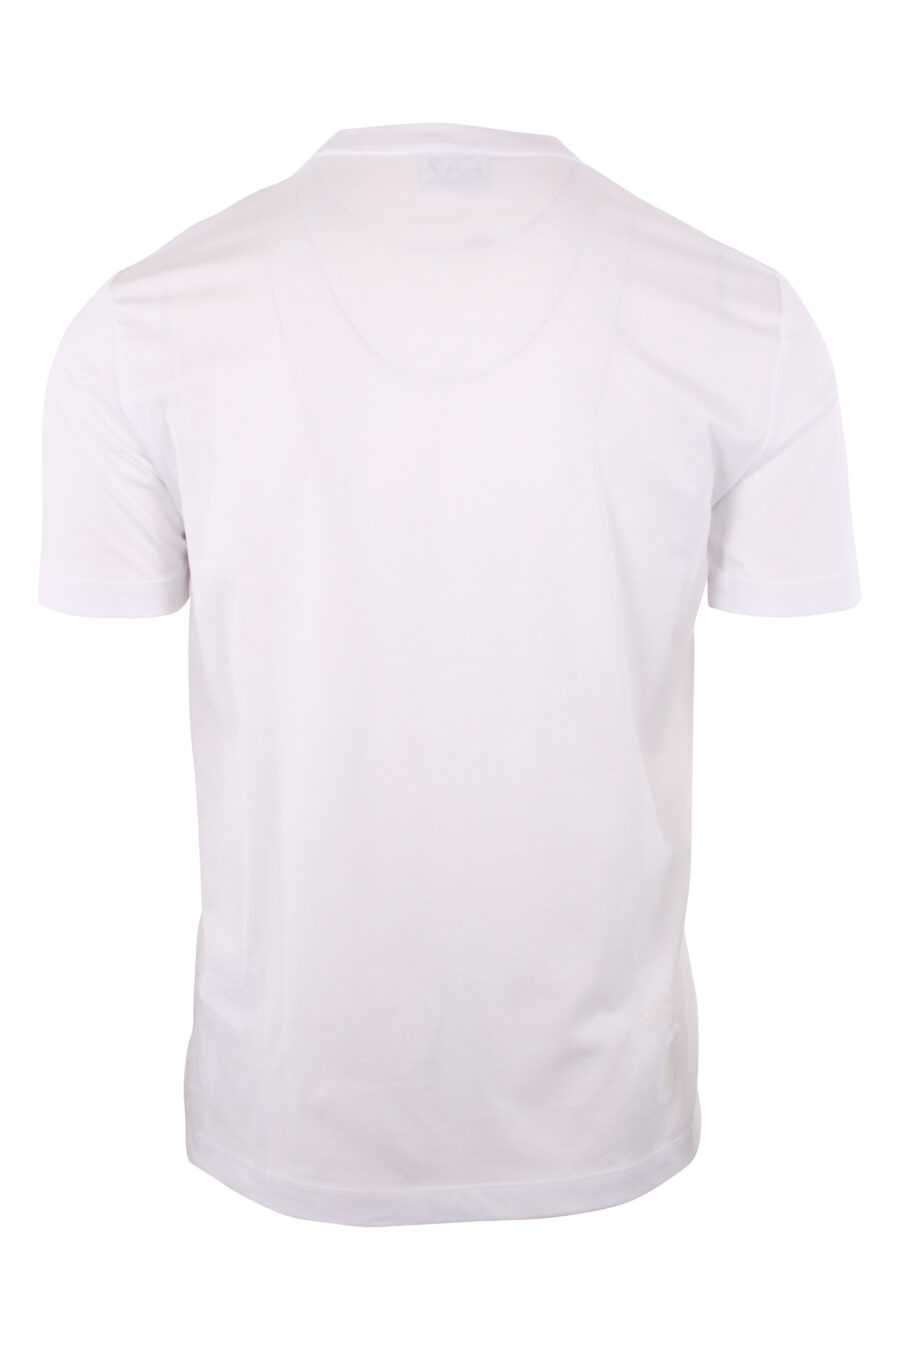 Camiseta blanca con maxilogo "lux identity" negro - IMG 2007